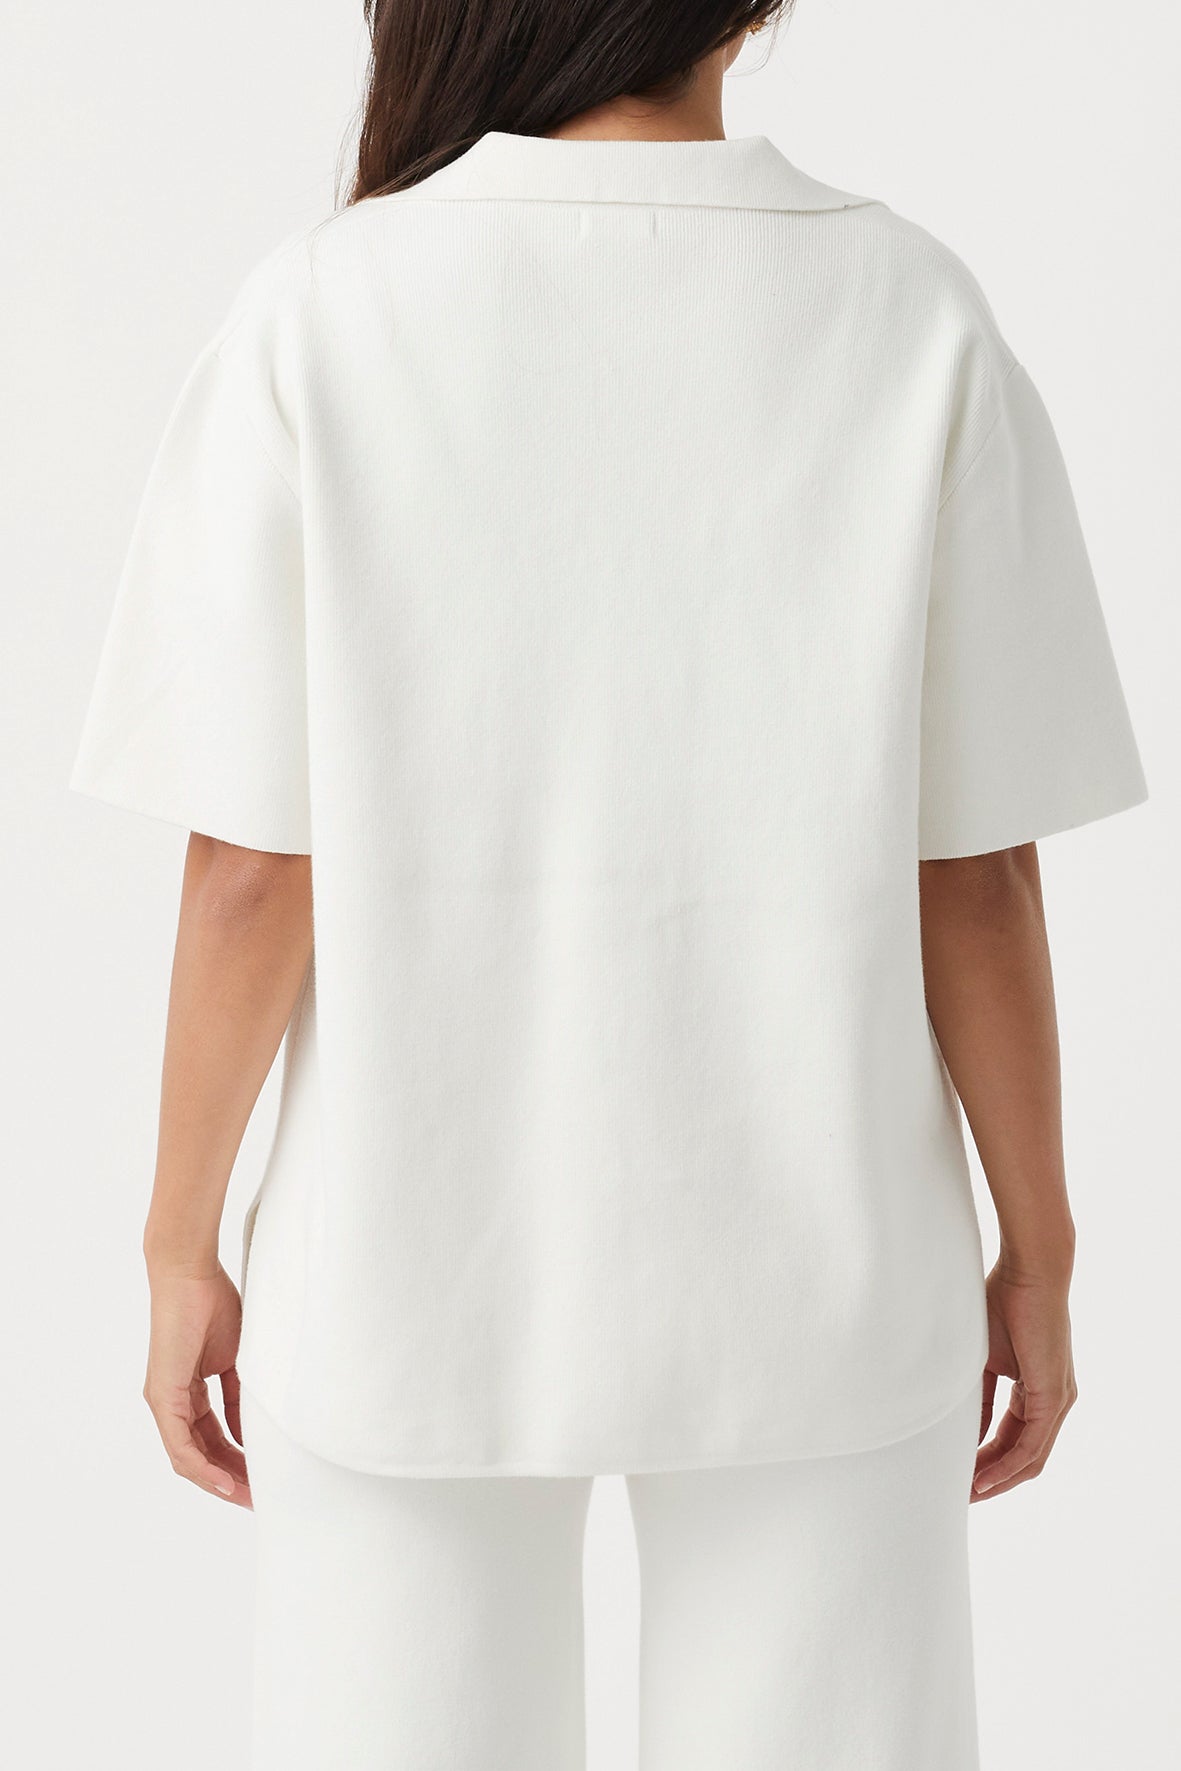 Easton Shirt | Cream